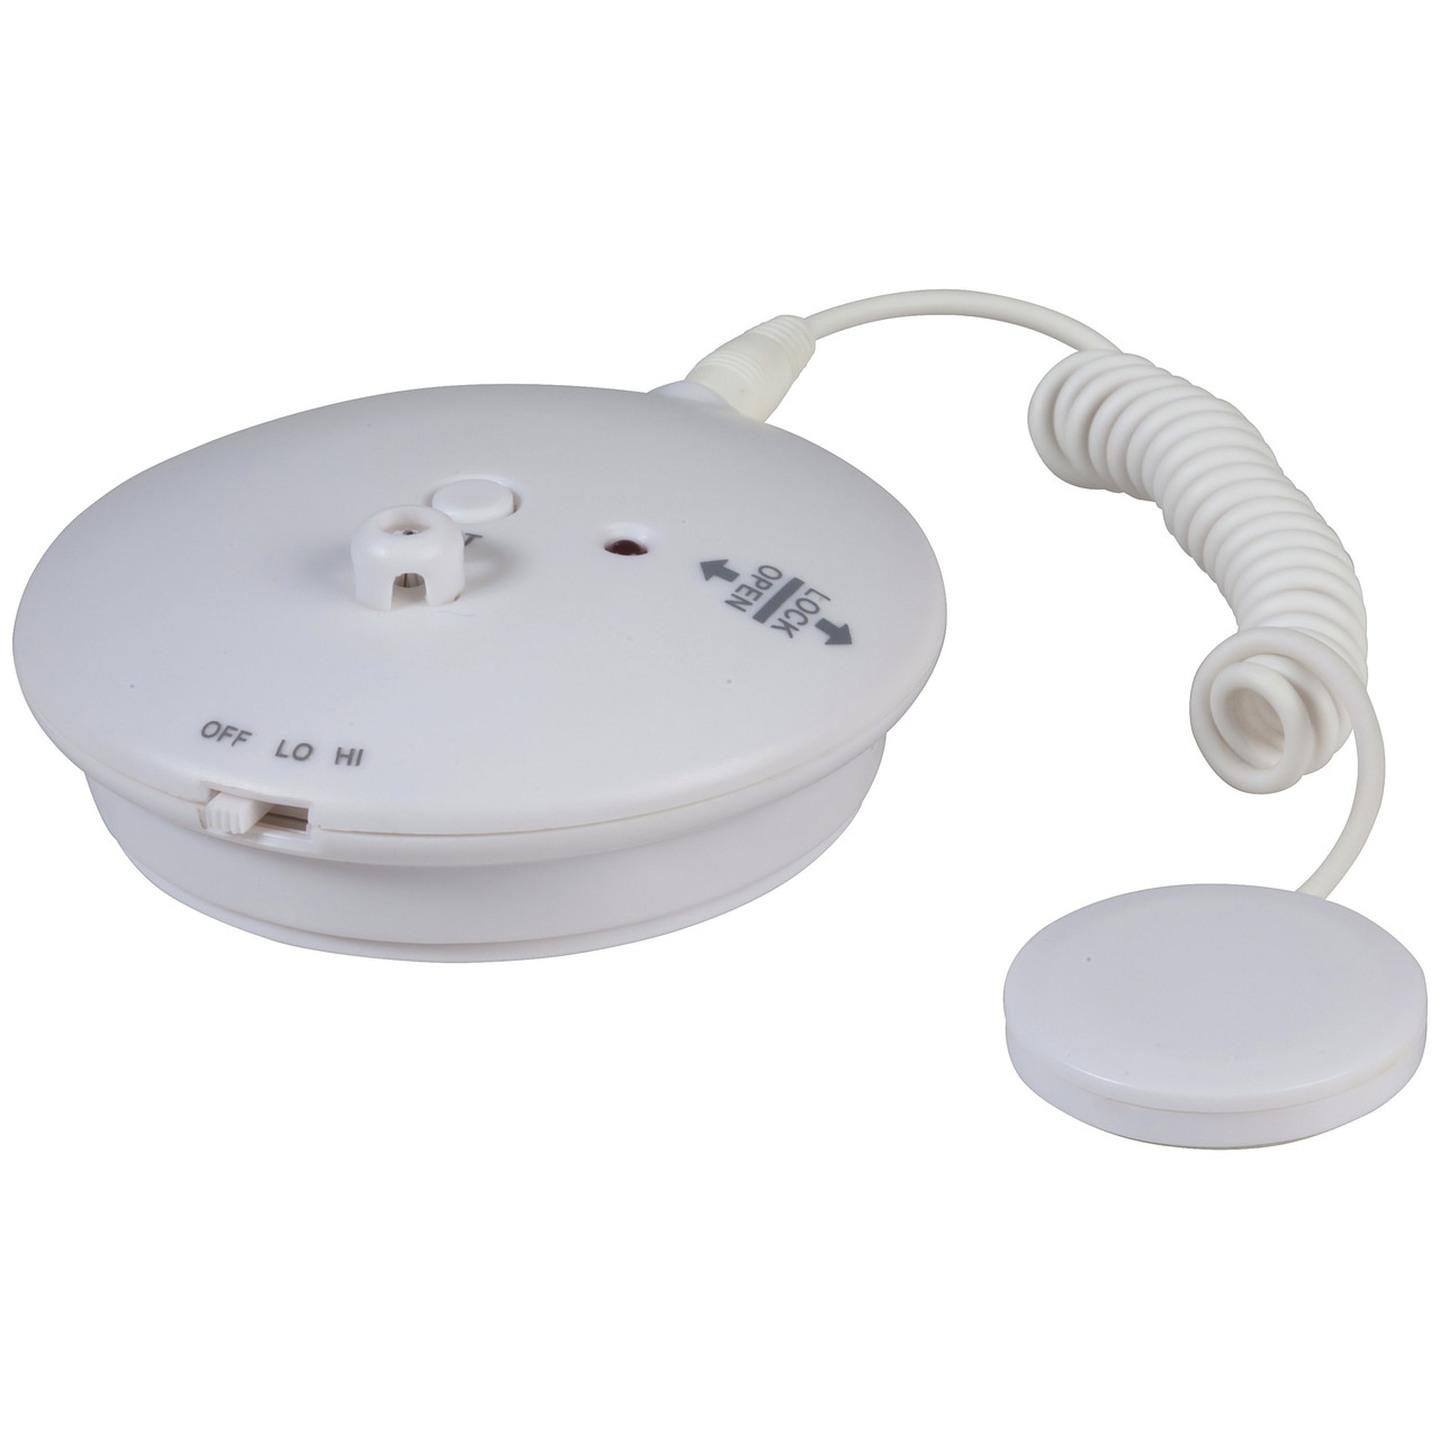 Temperature Sensor for LA-5610 Wi-Fi Alarm